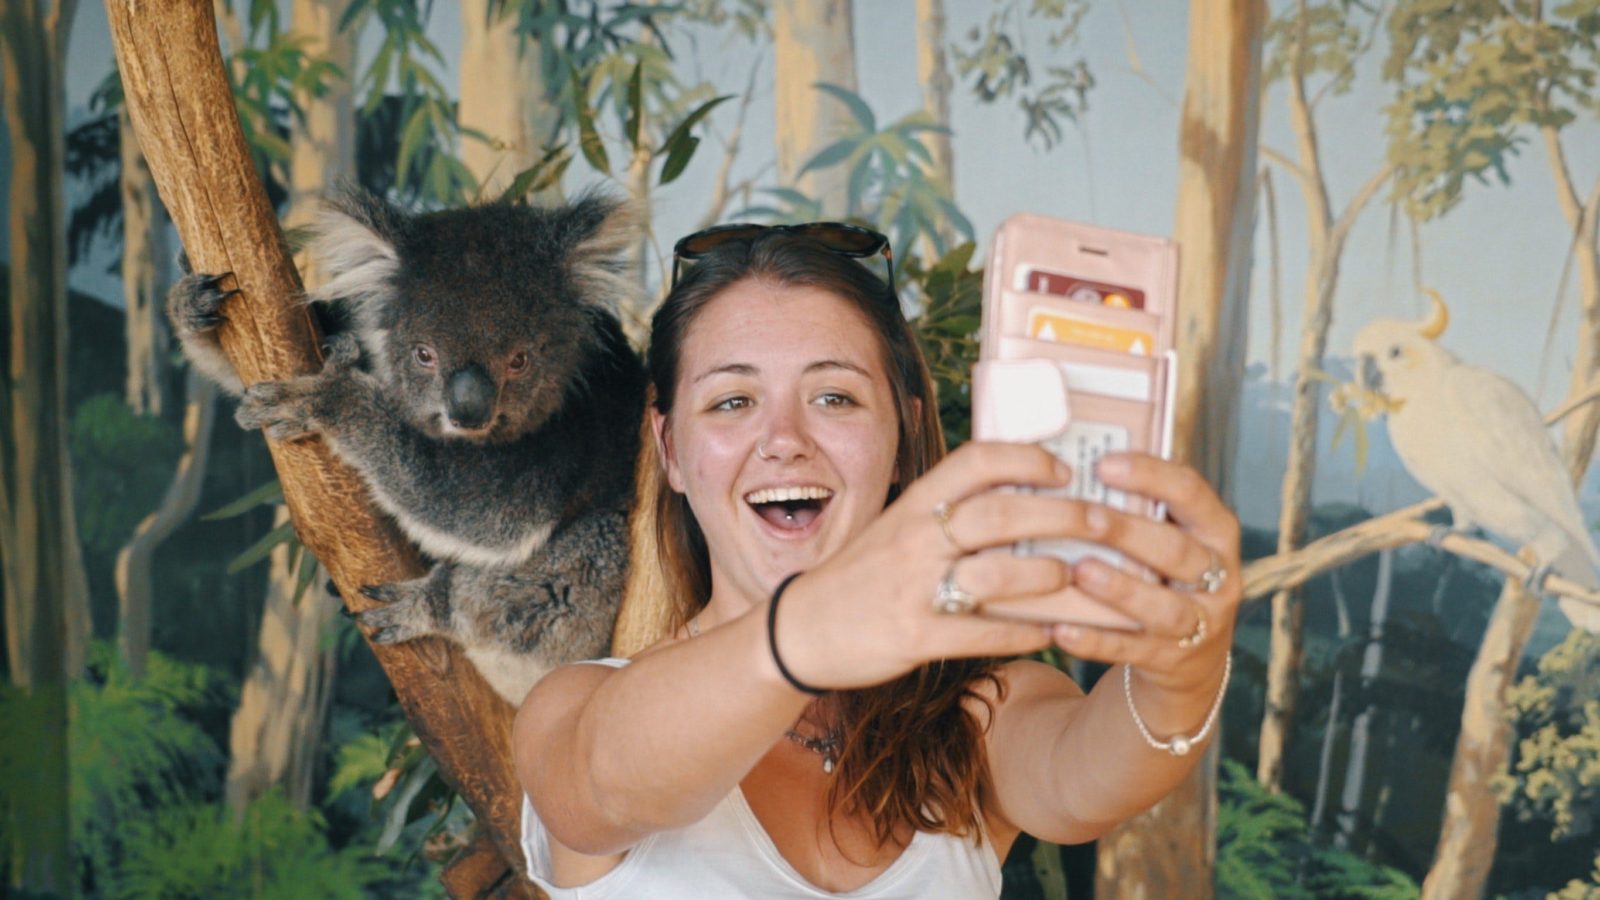 Welcome to Travel: Melbourne - Koala Selfie